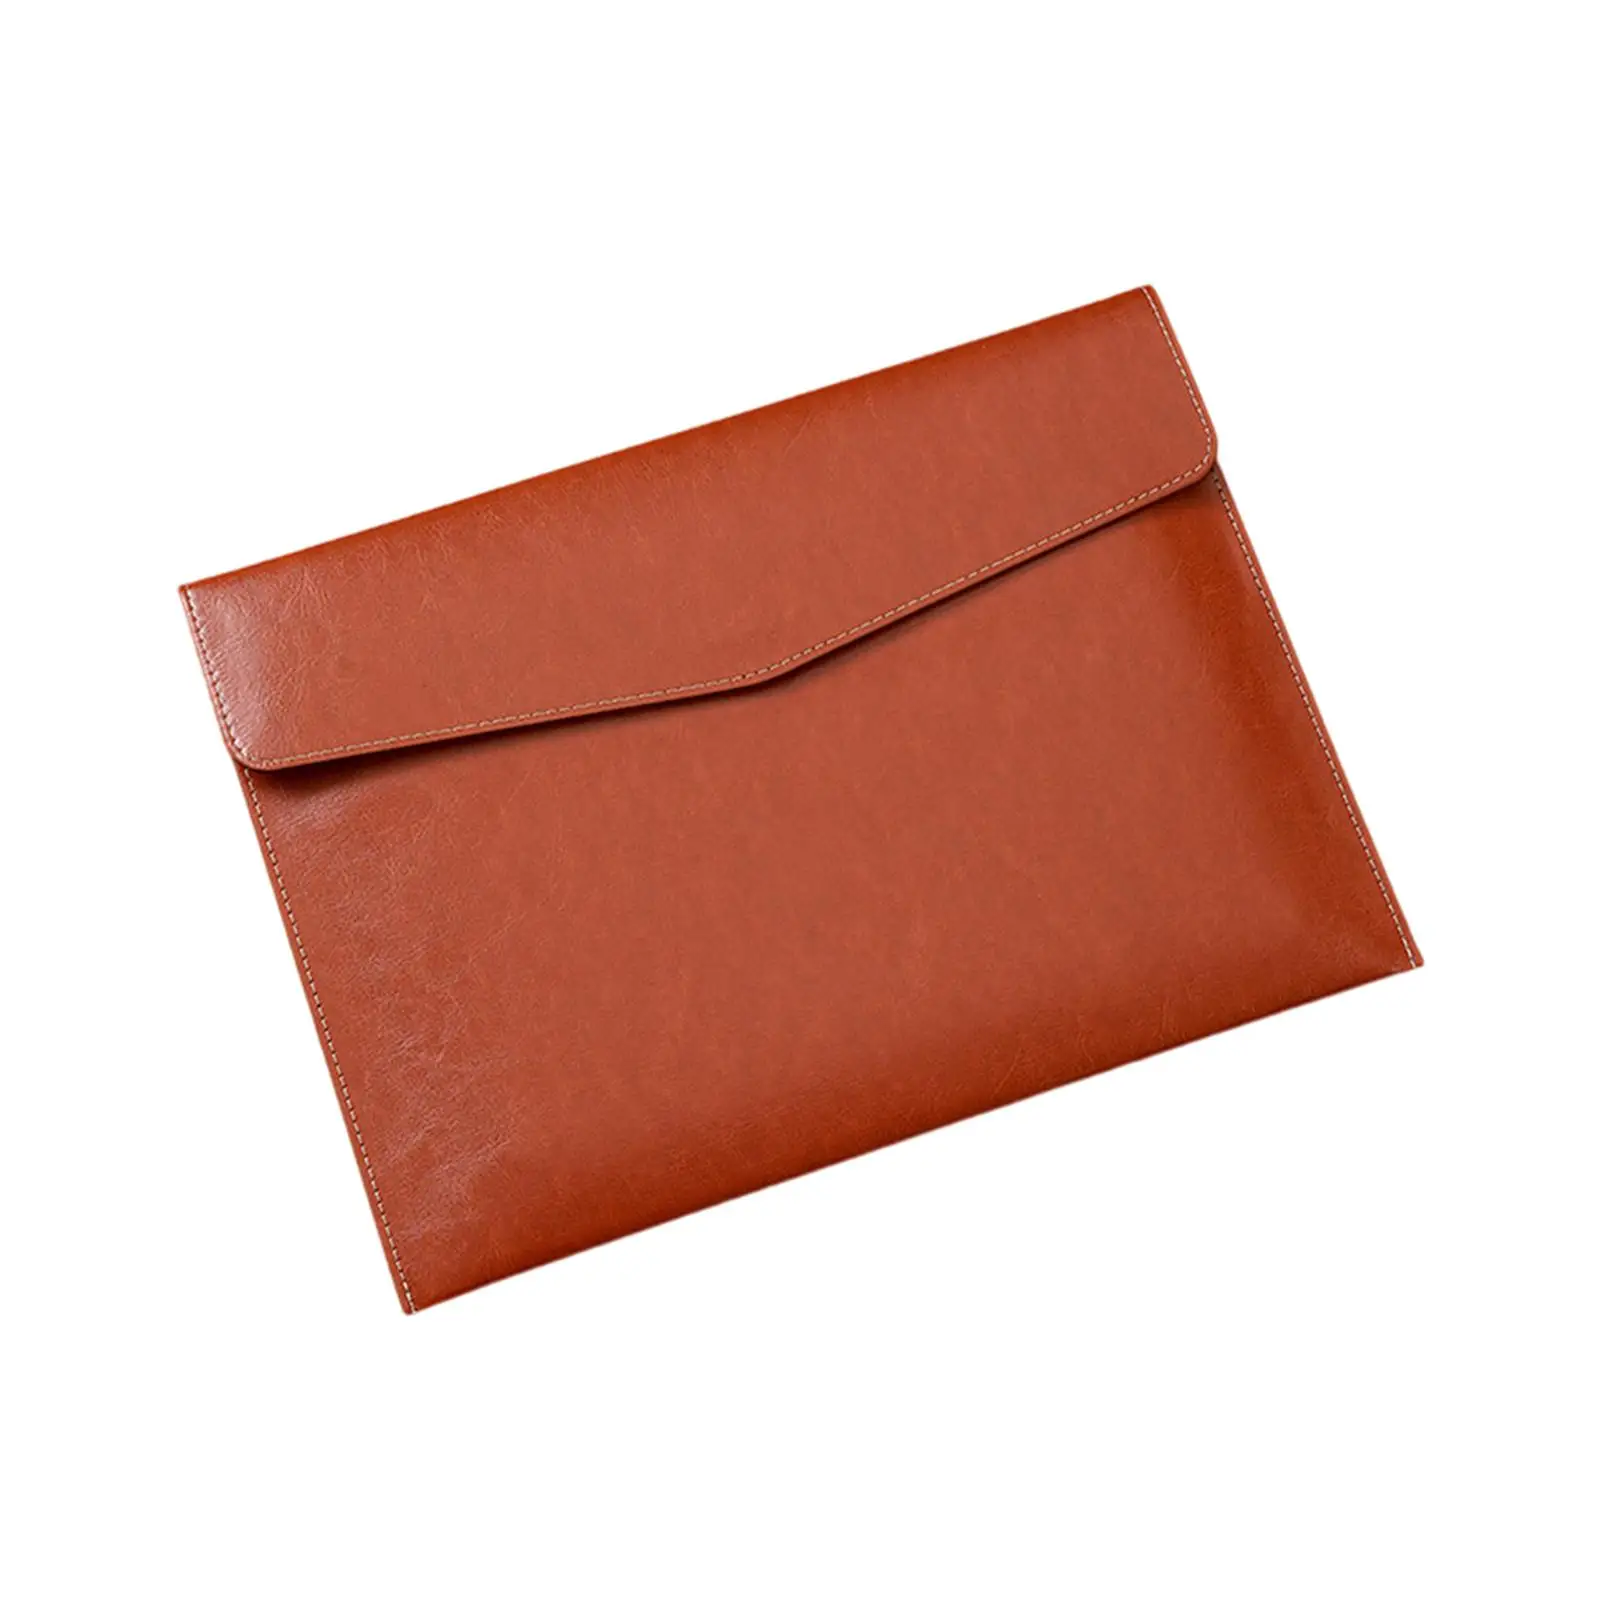 PU Leather Folder Waterproof Portfolio Portable Large Capacity Envelope Folder Case for Office Family Teaching Commercial Travel